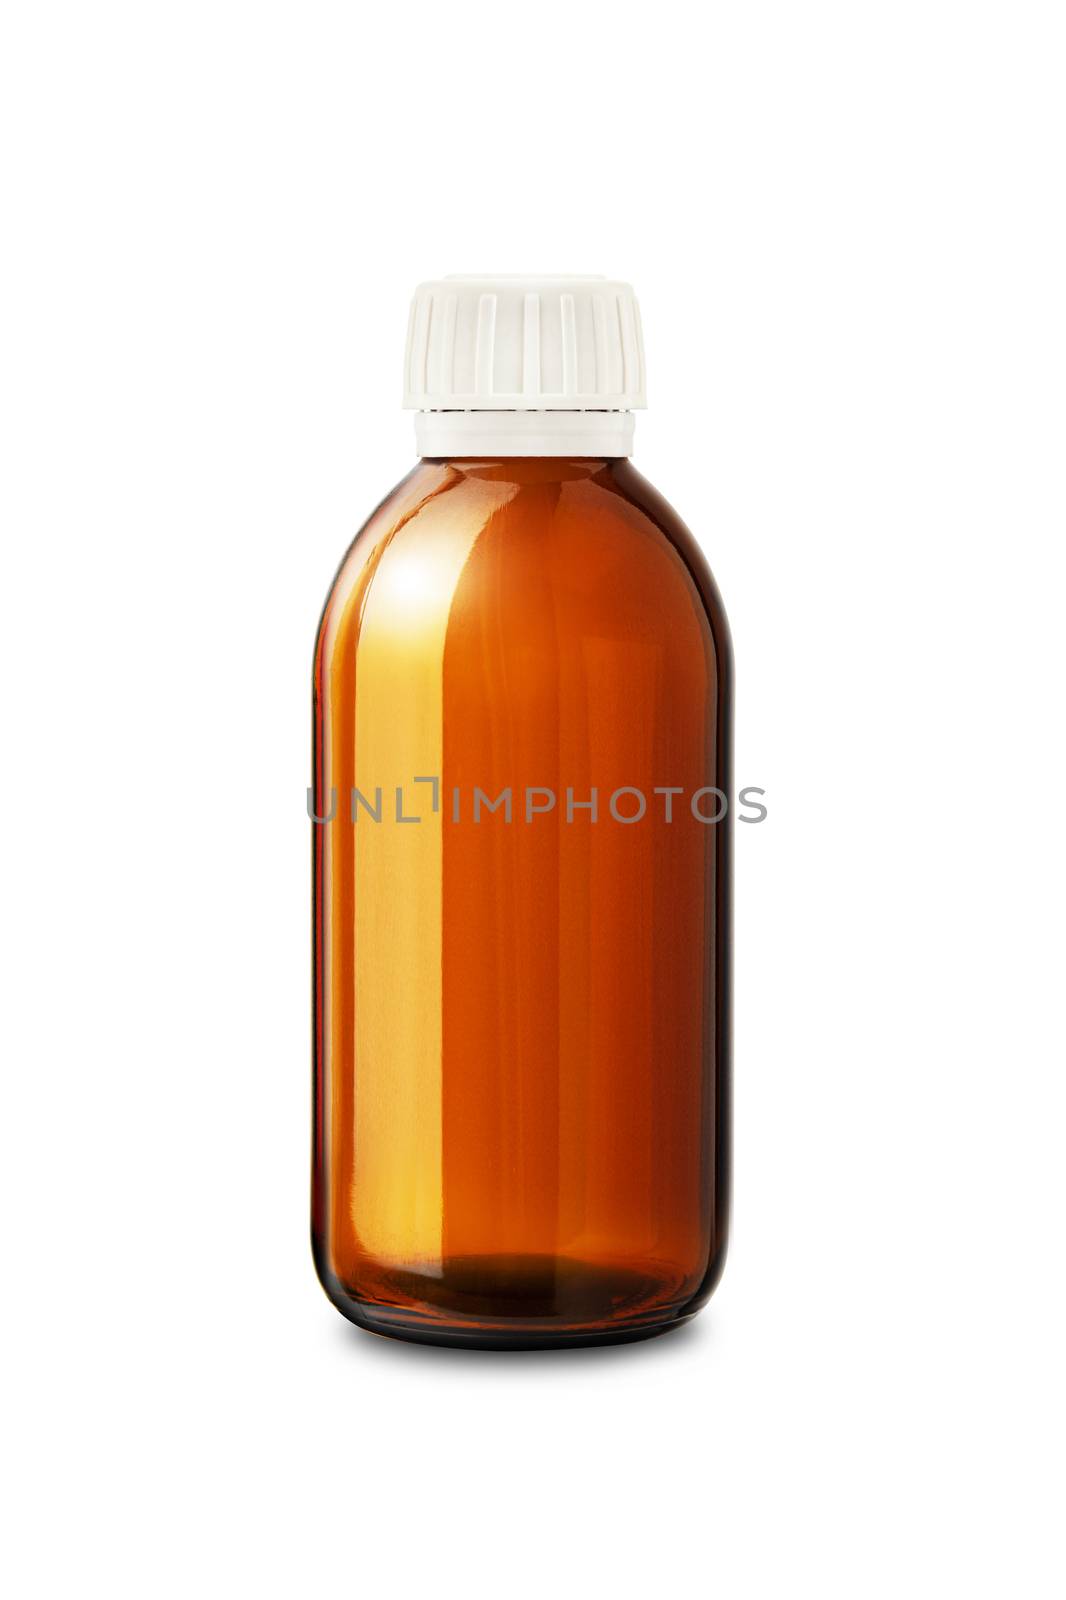 ClosrdMedicine bottle close up isolated on white background by SlayCer